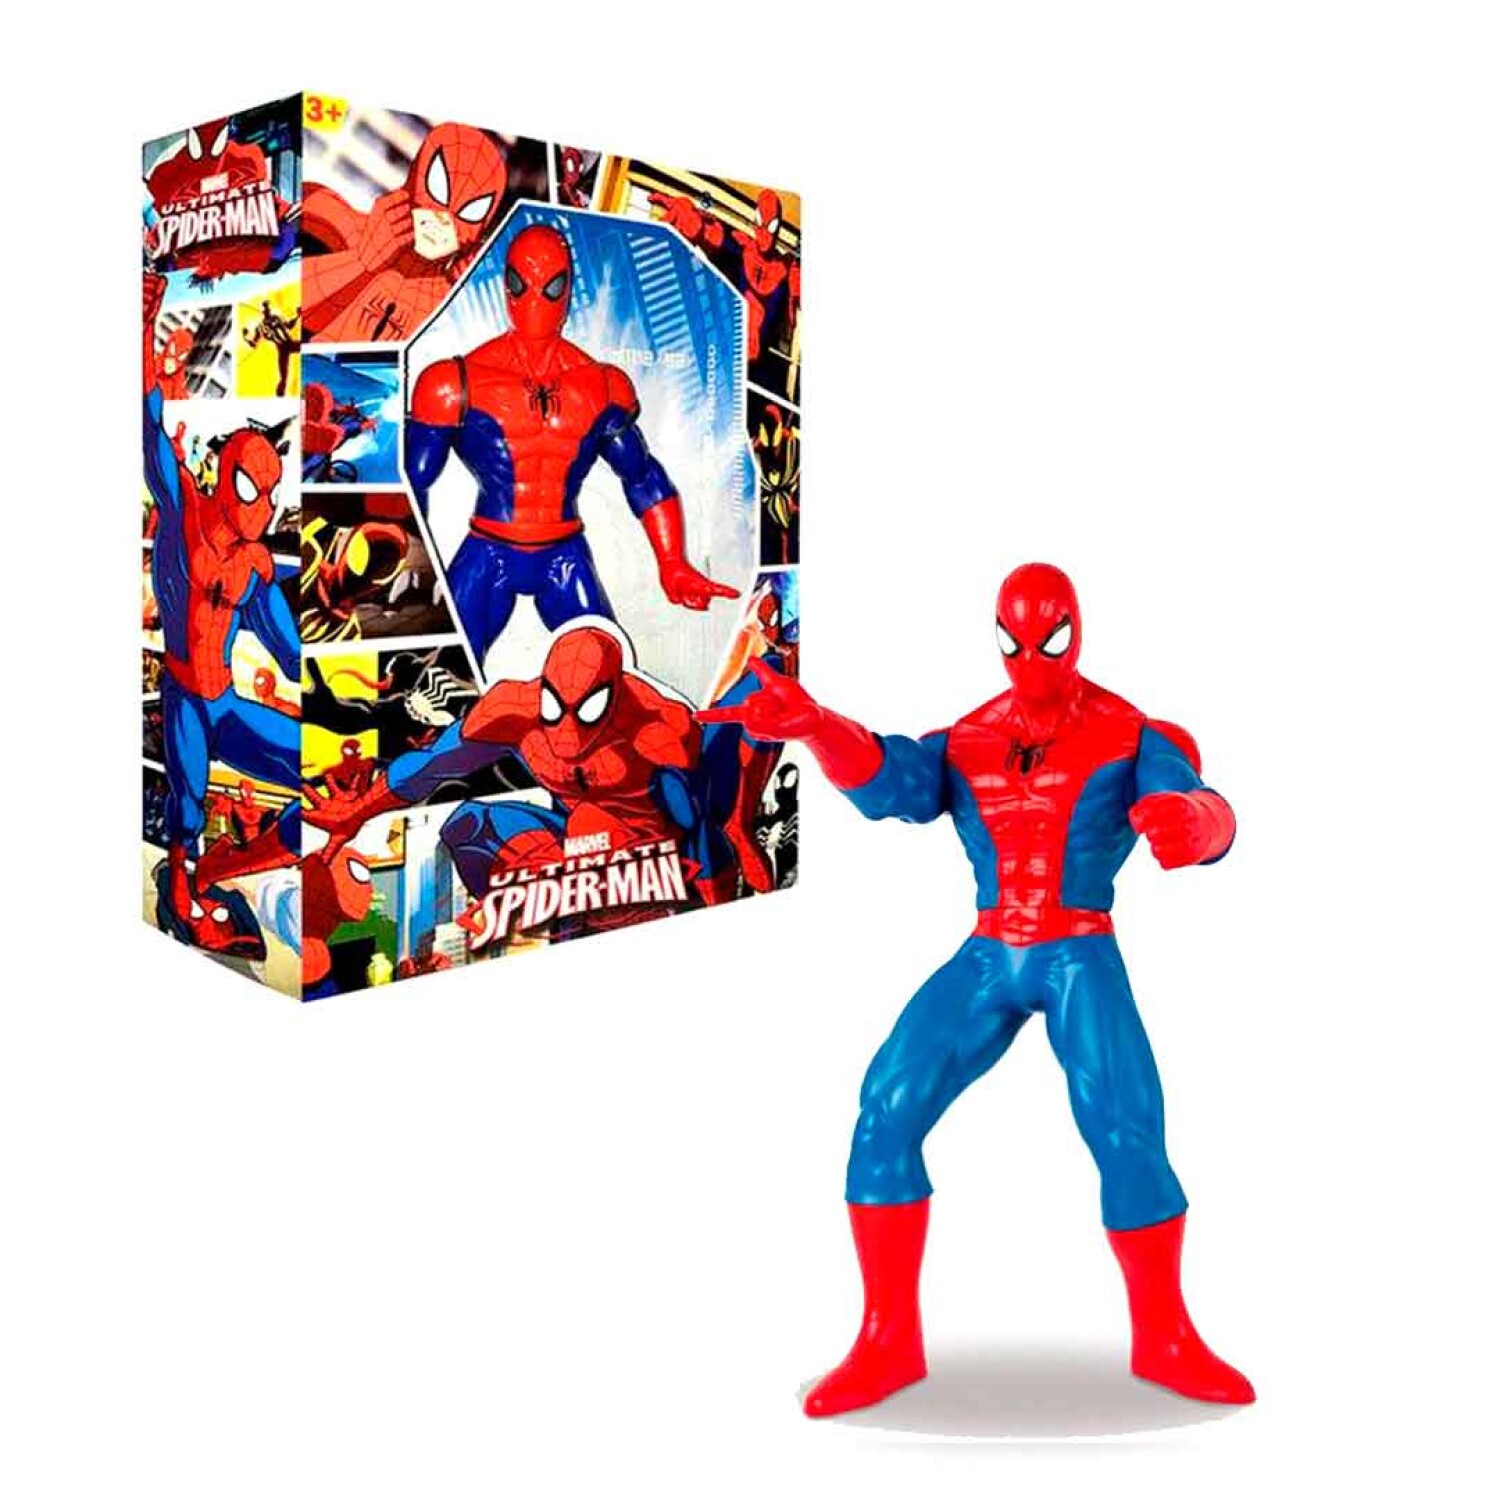 Muñeco Spiderman 55cm superhéroe linea revolution - 001 — Universo Binario